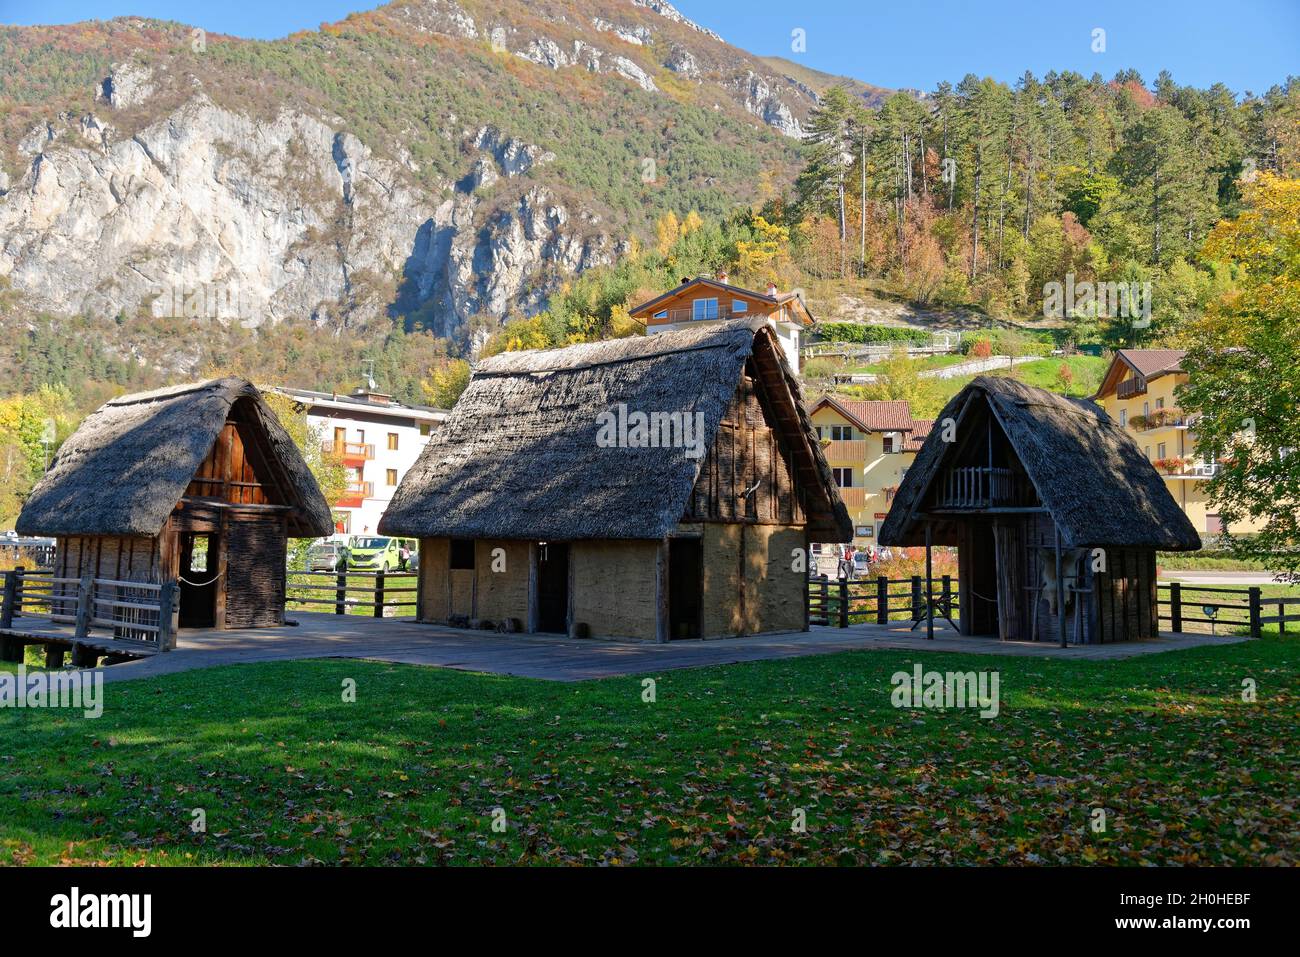 Ancient pile dwellings from the Bronze Age, Lake Ledro Pile Dwelling Museum, Ledro, Lake Garda West, Trentino, Italy Stock Photo